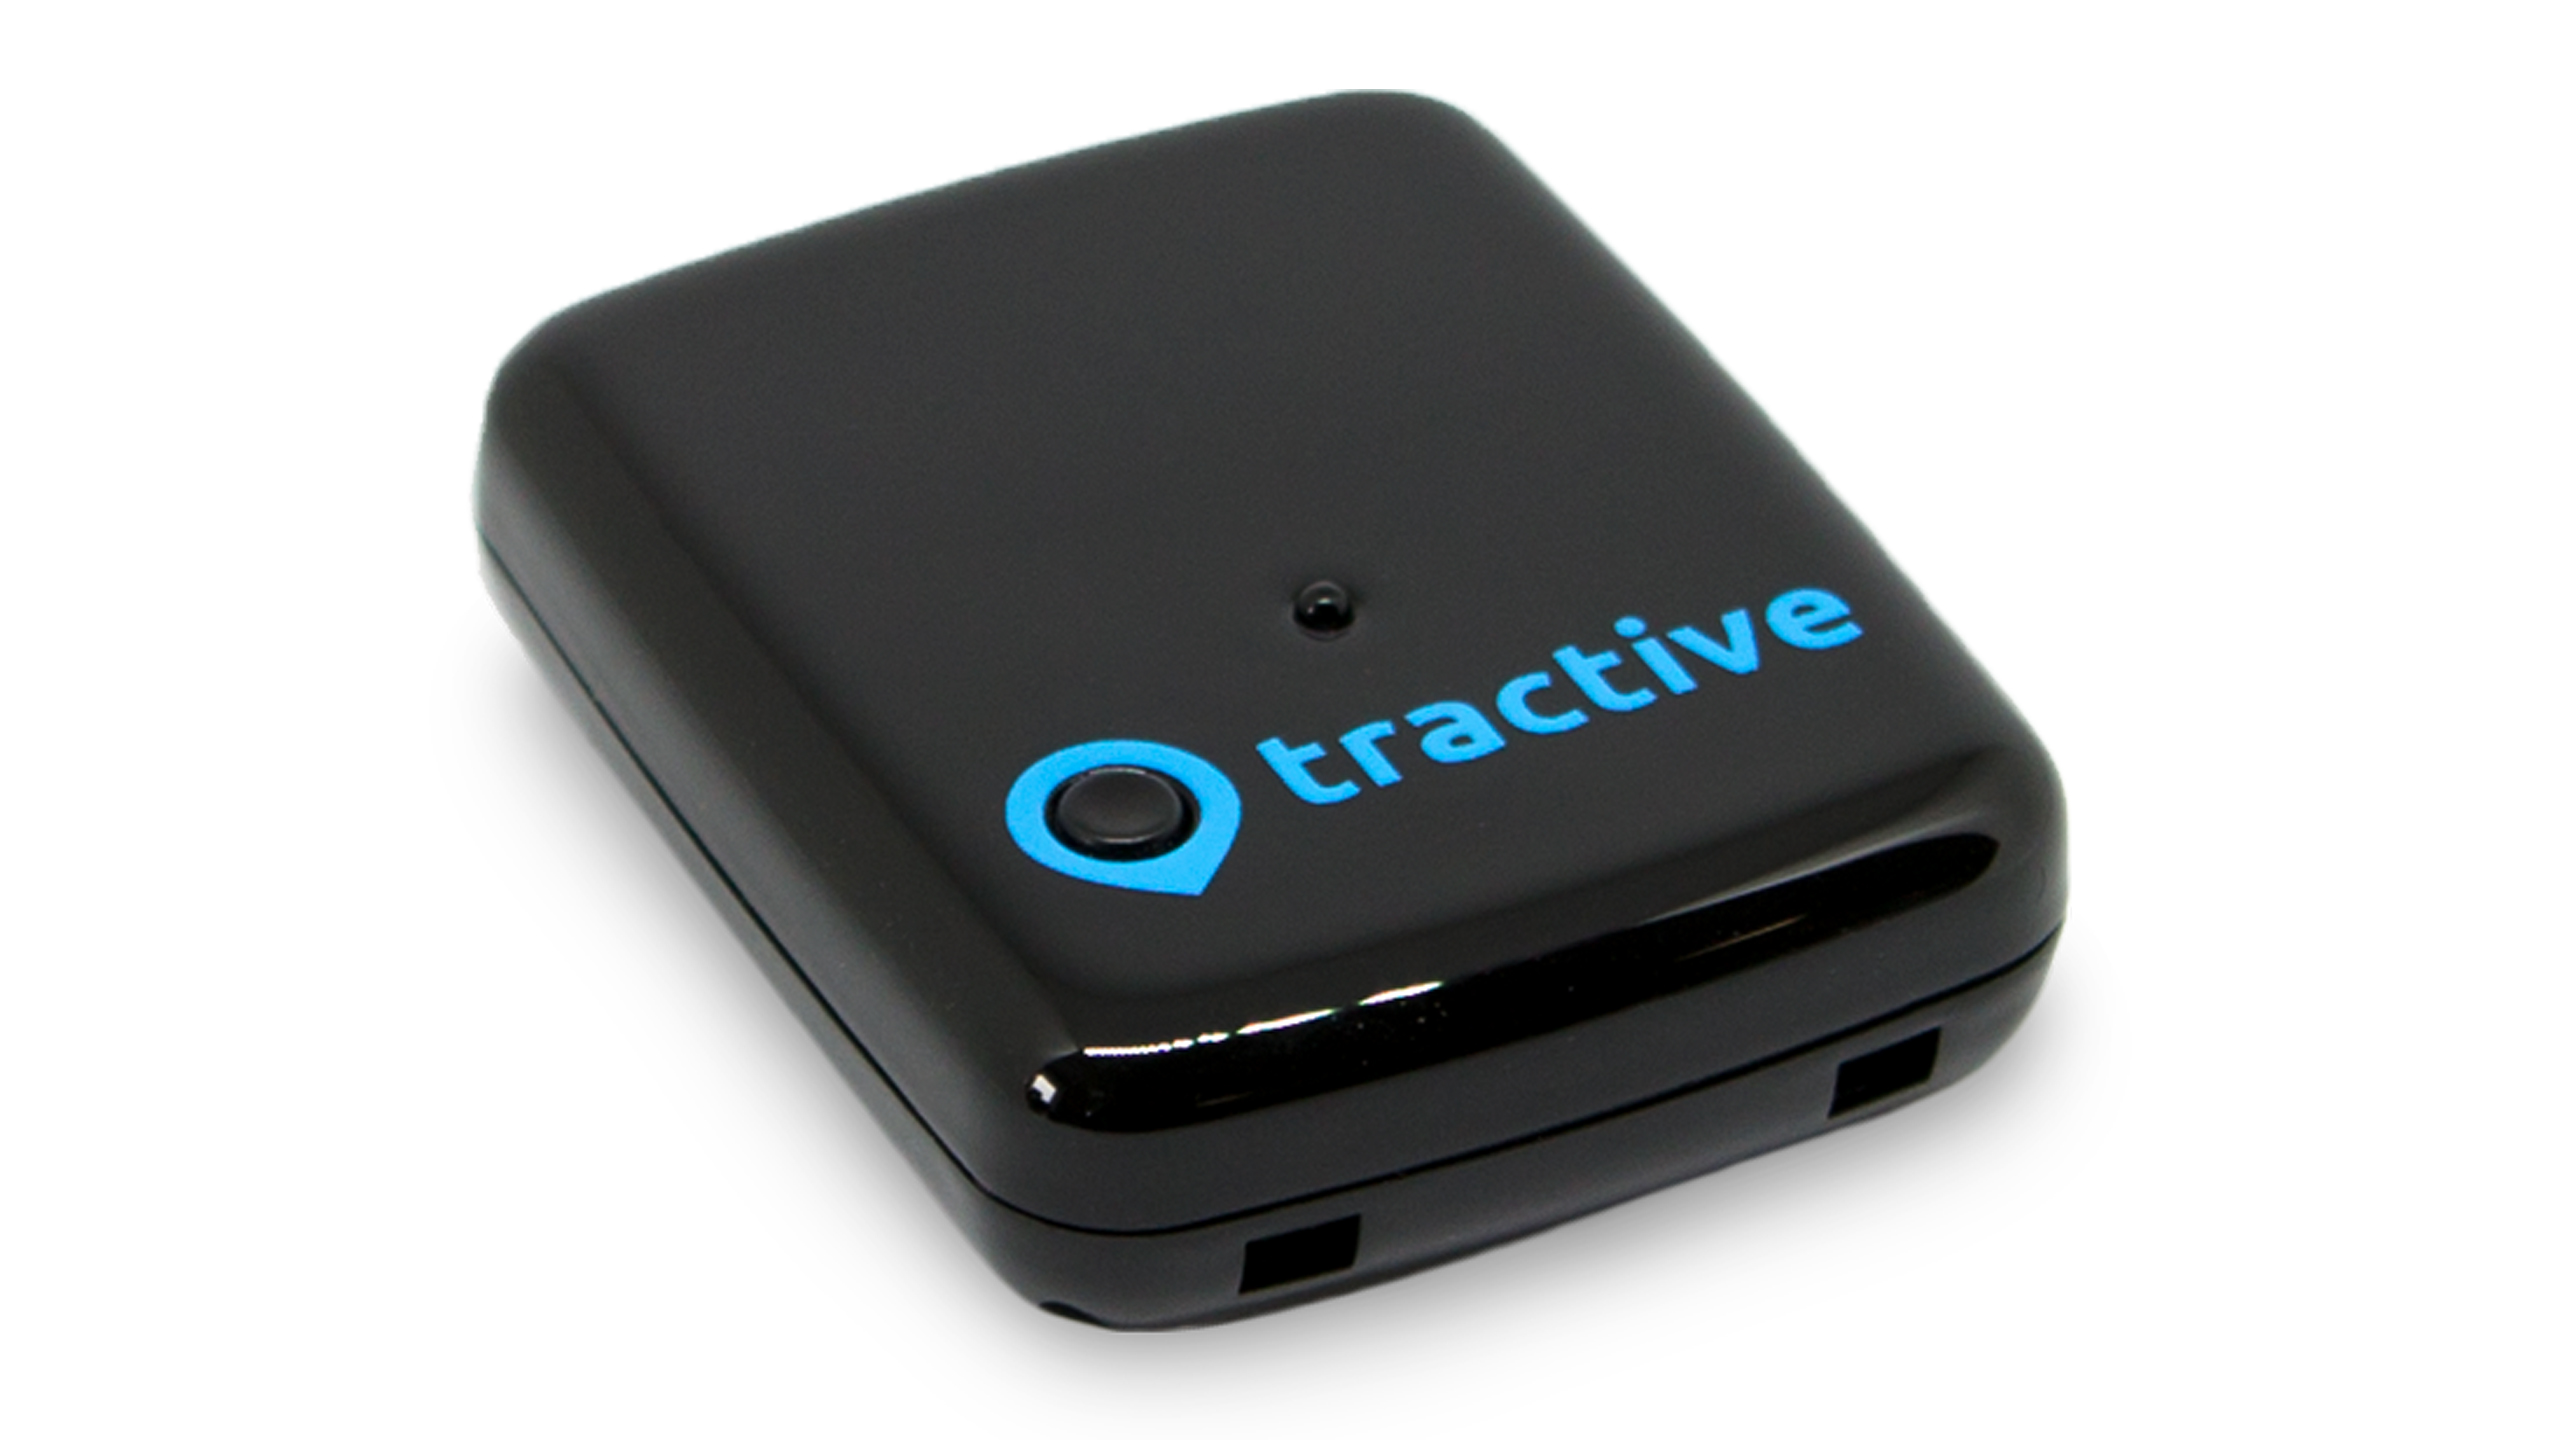 tractive gps tracker